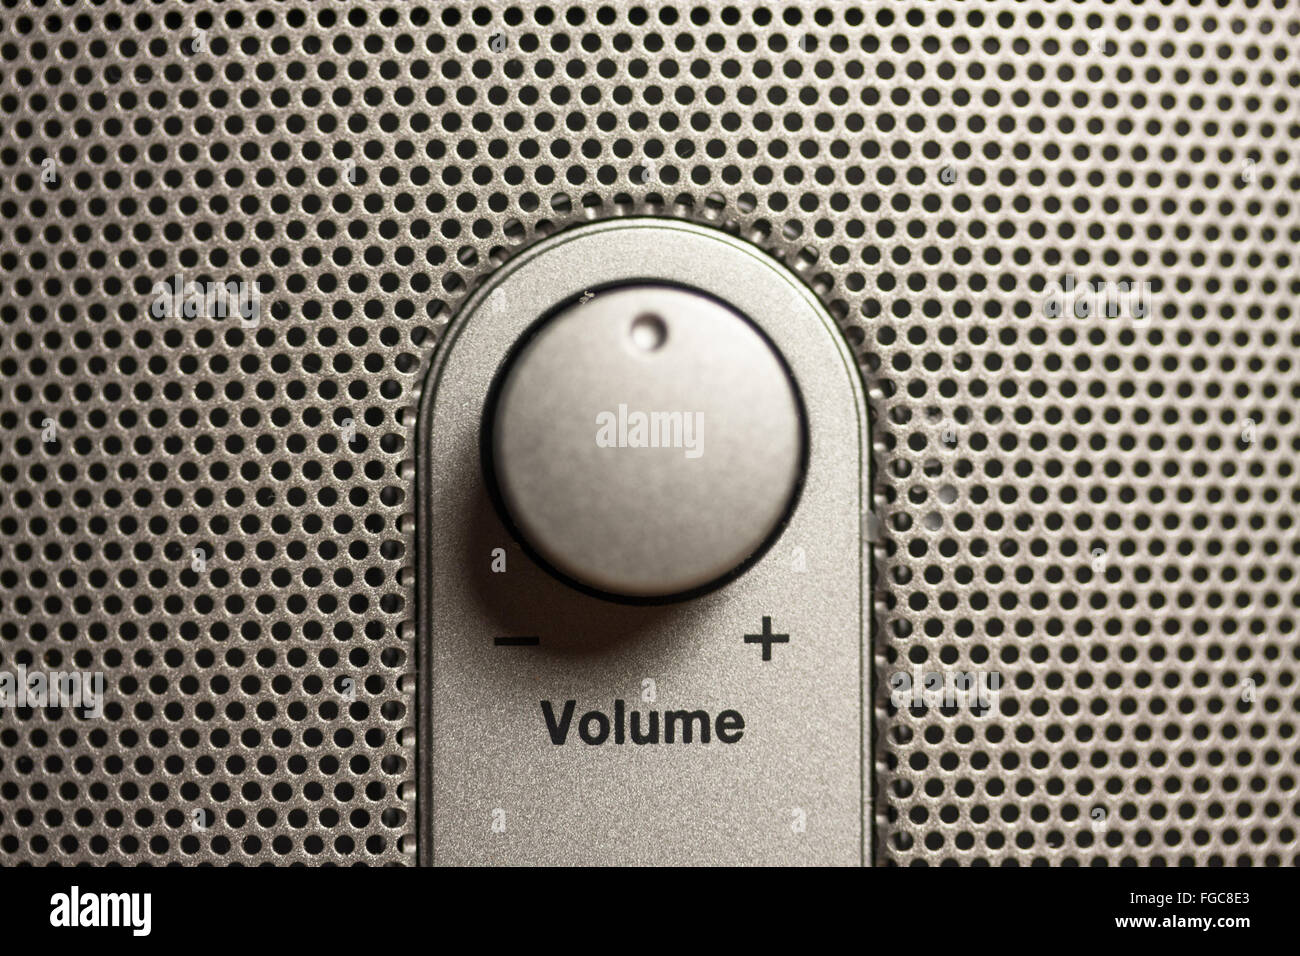 Volume Button on speakers Stock Photo